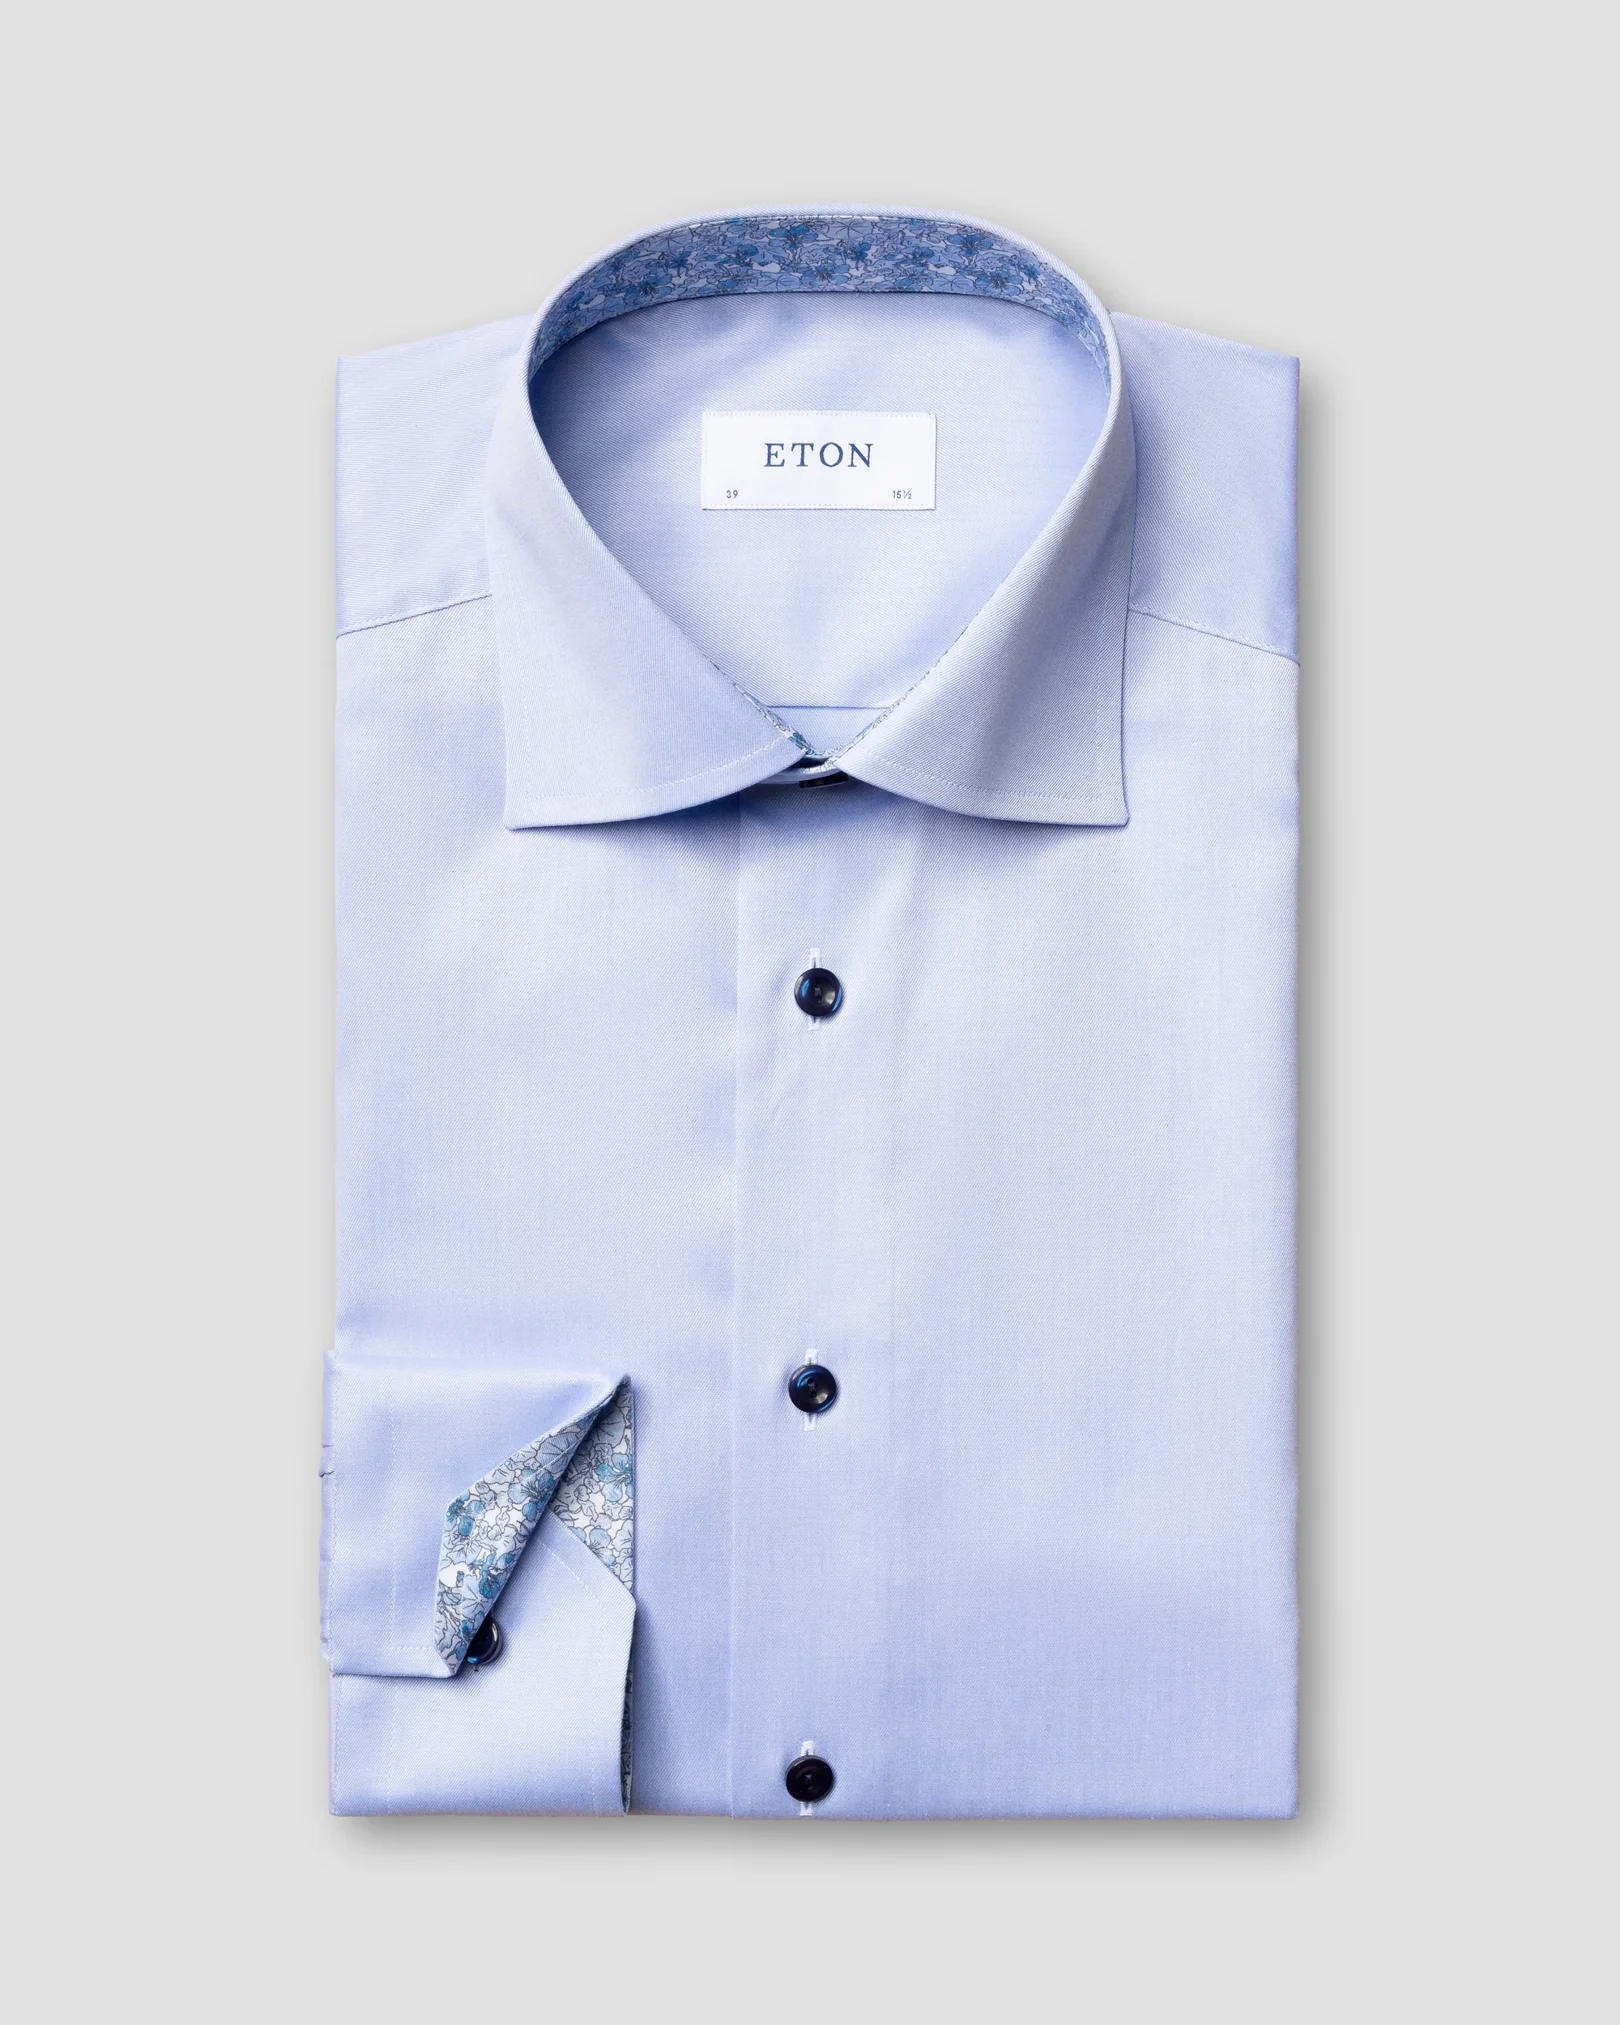 Eton - blue twill shirt blue details